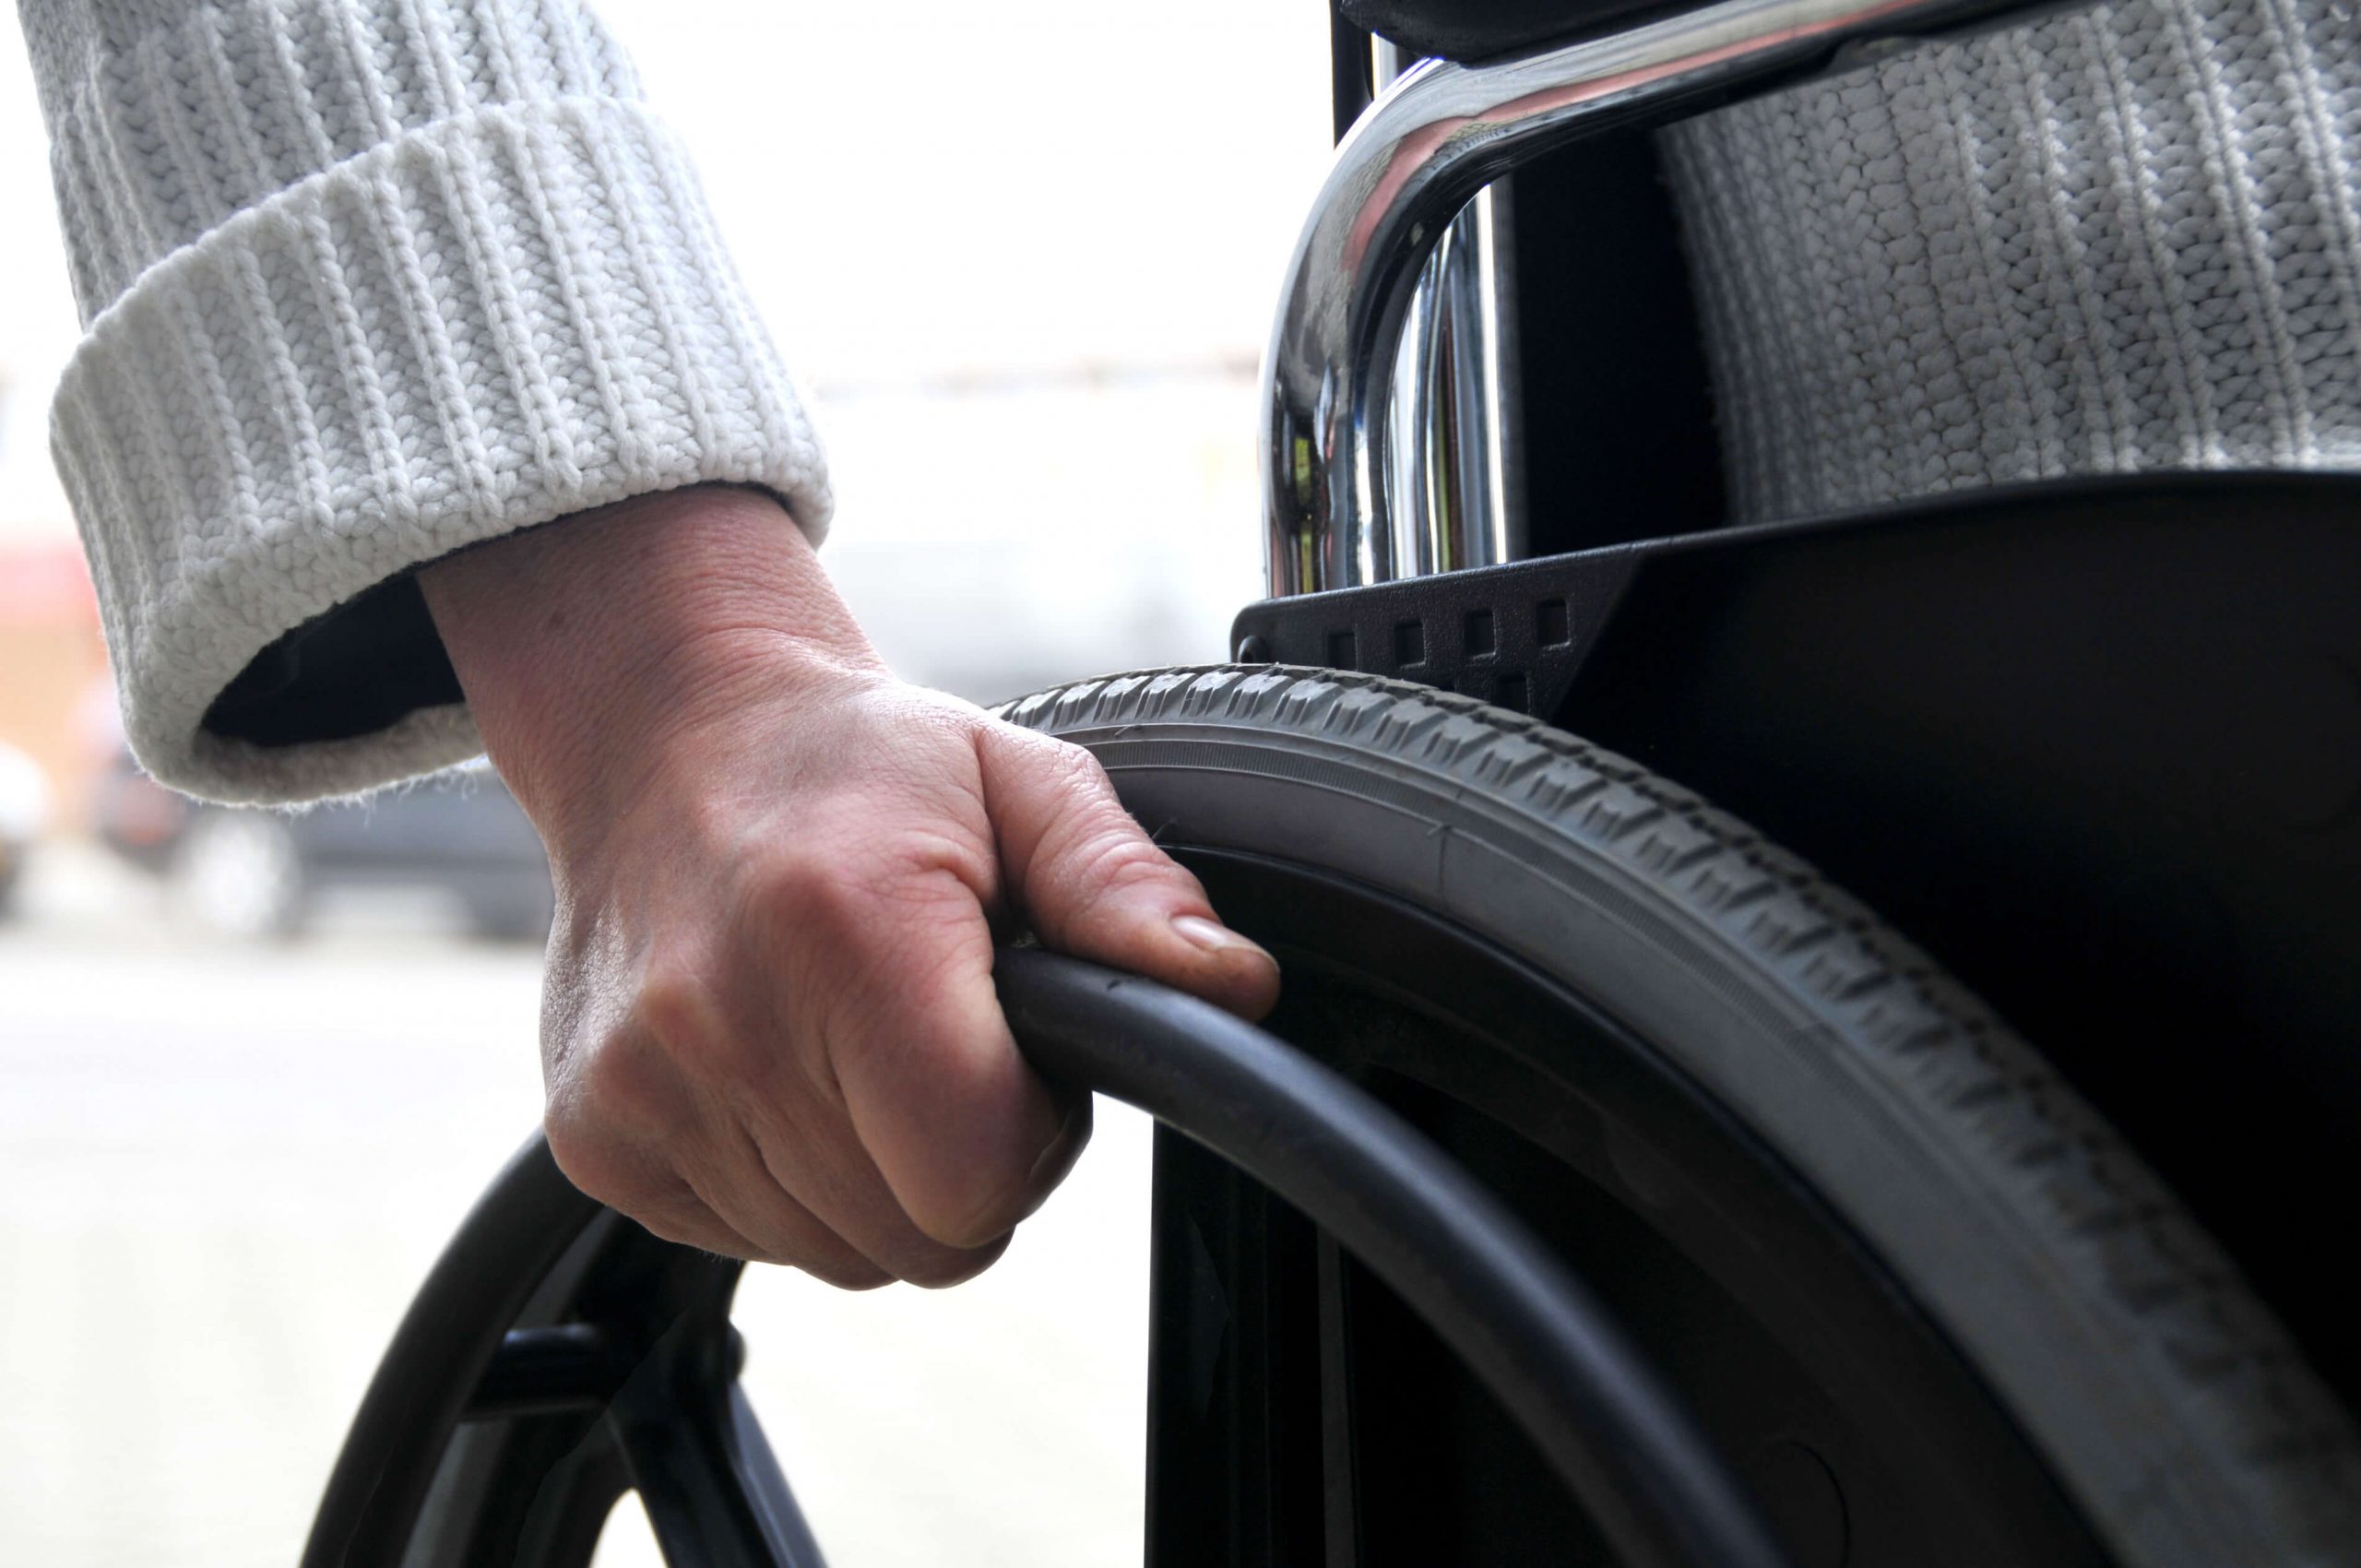 Prevoz osoba sa invaliditetom